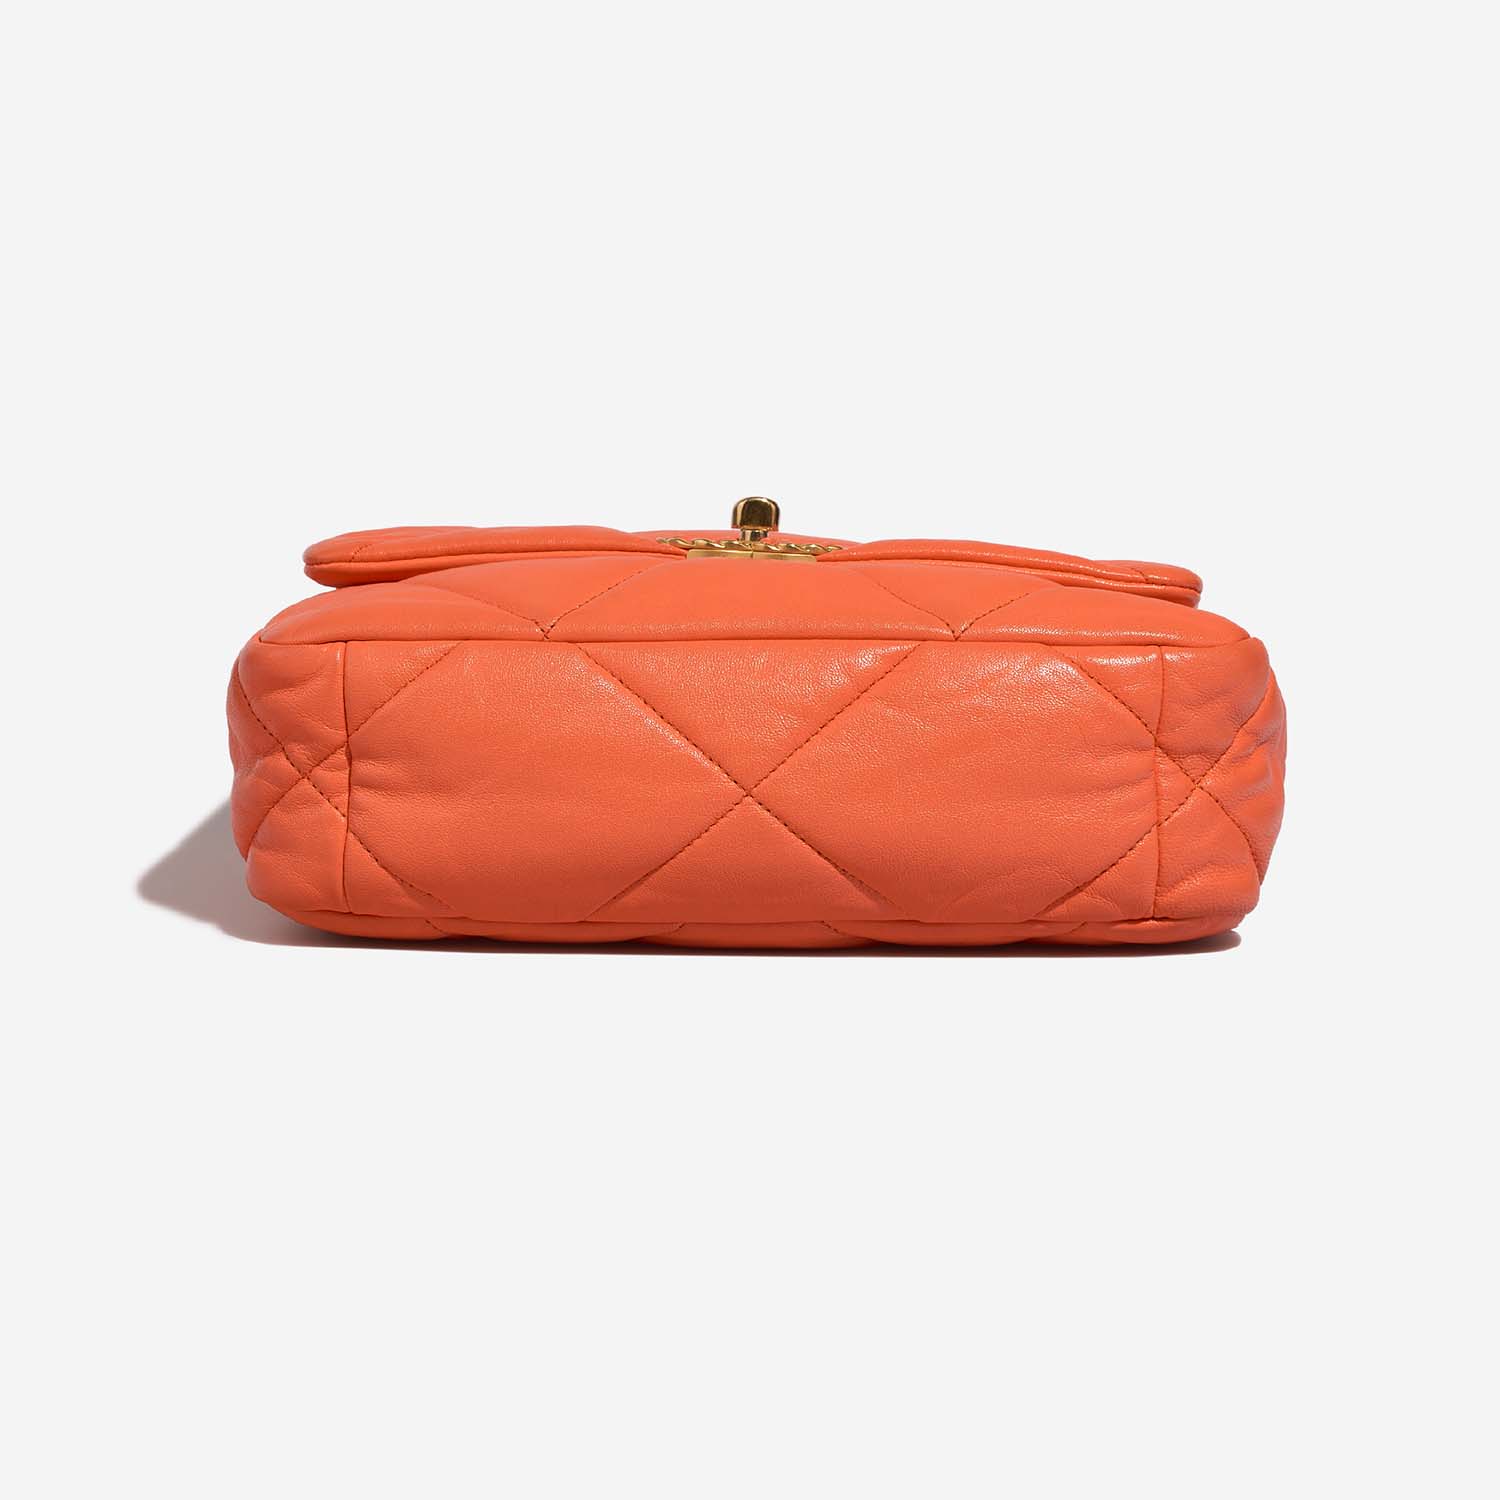 Chanel 19 Flap Bag Lamb Orange